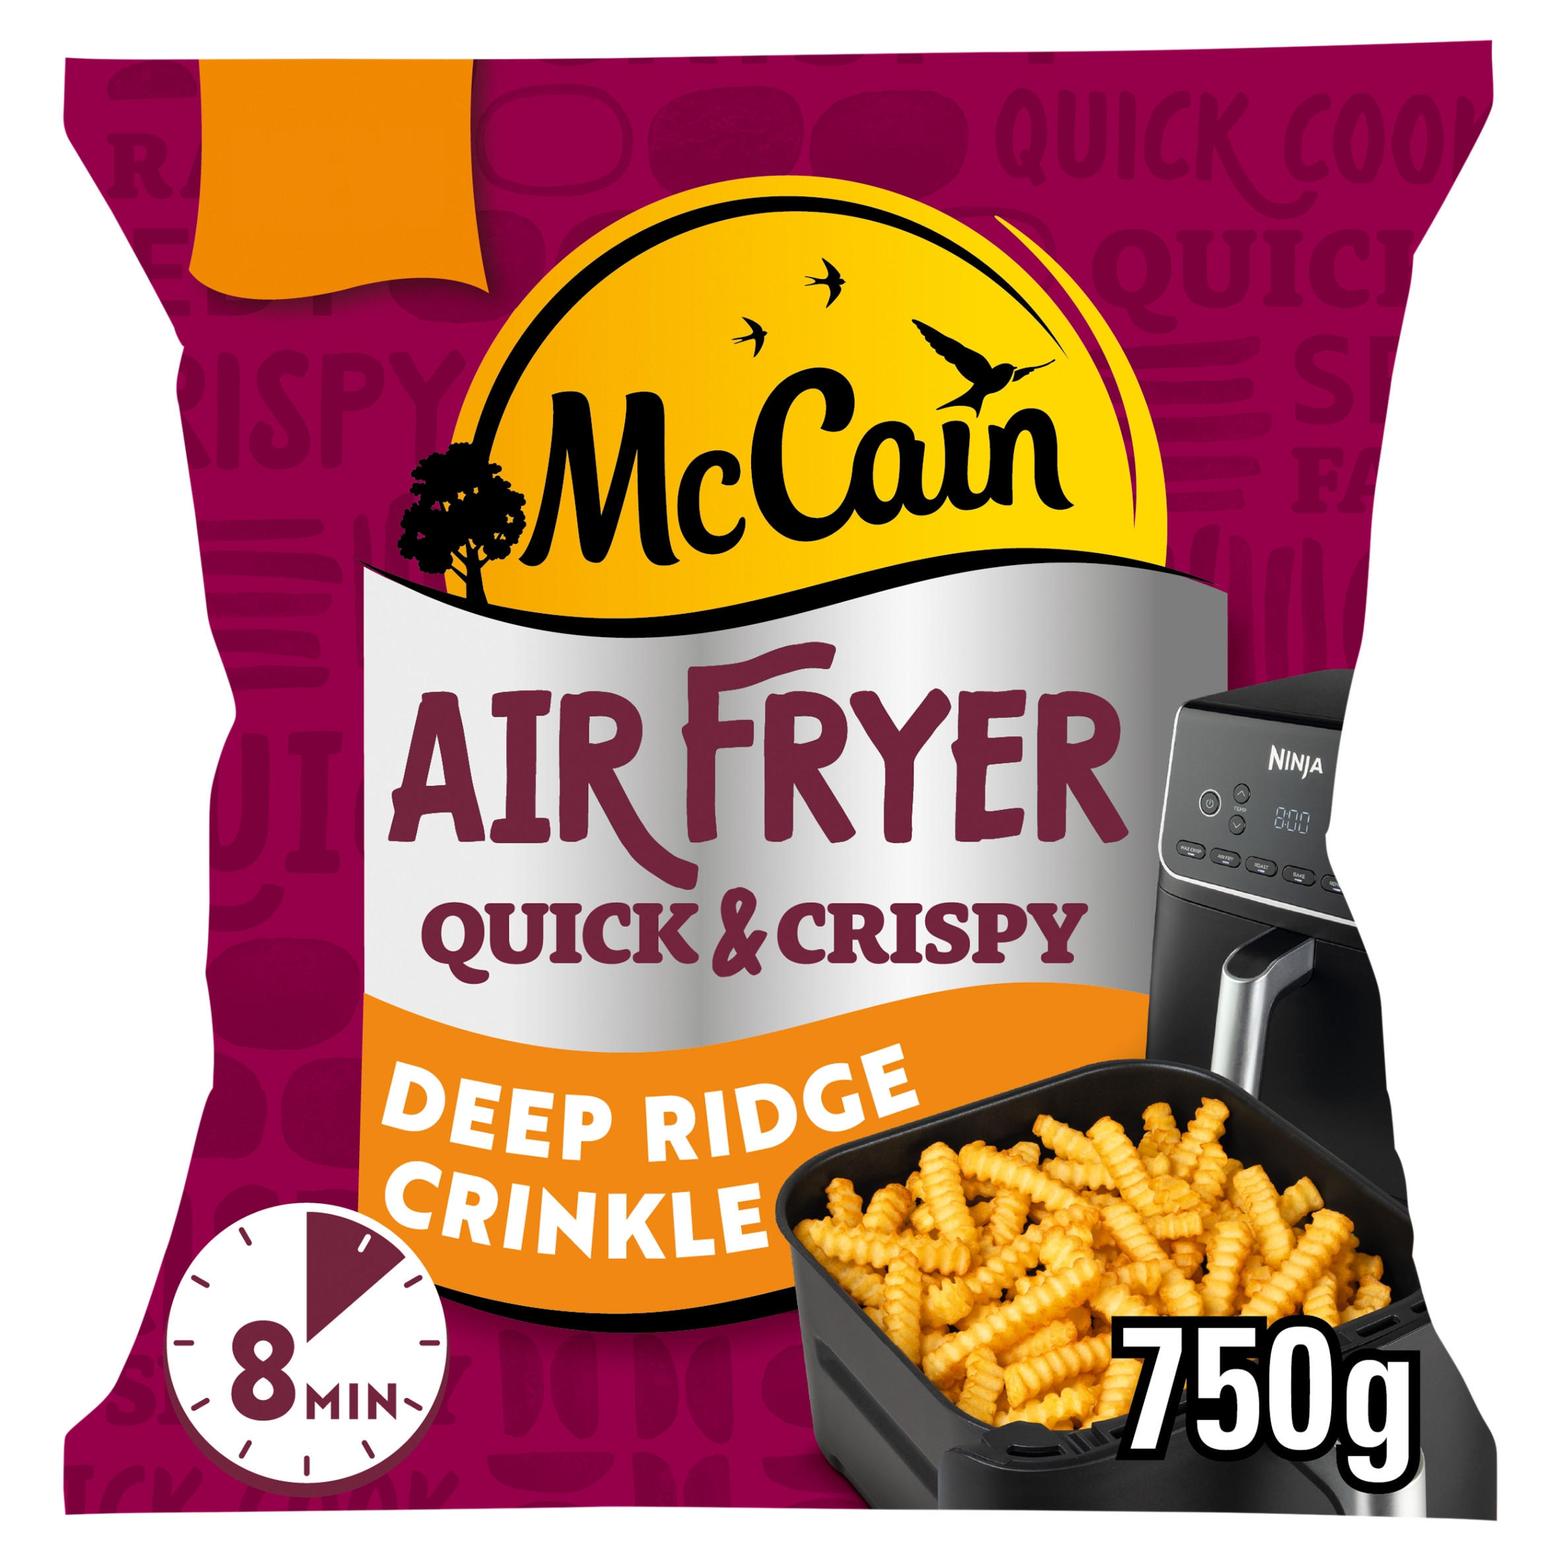 McCain Air Fryer Deep Ridge Crinkle Fries 750g offers at £1.87 in Iceland